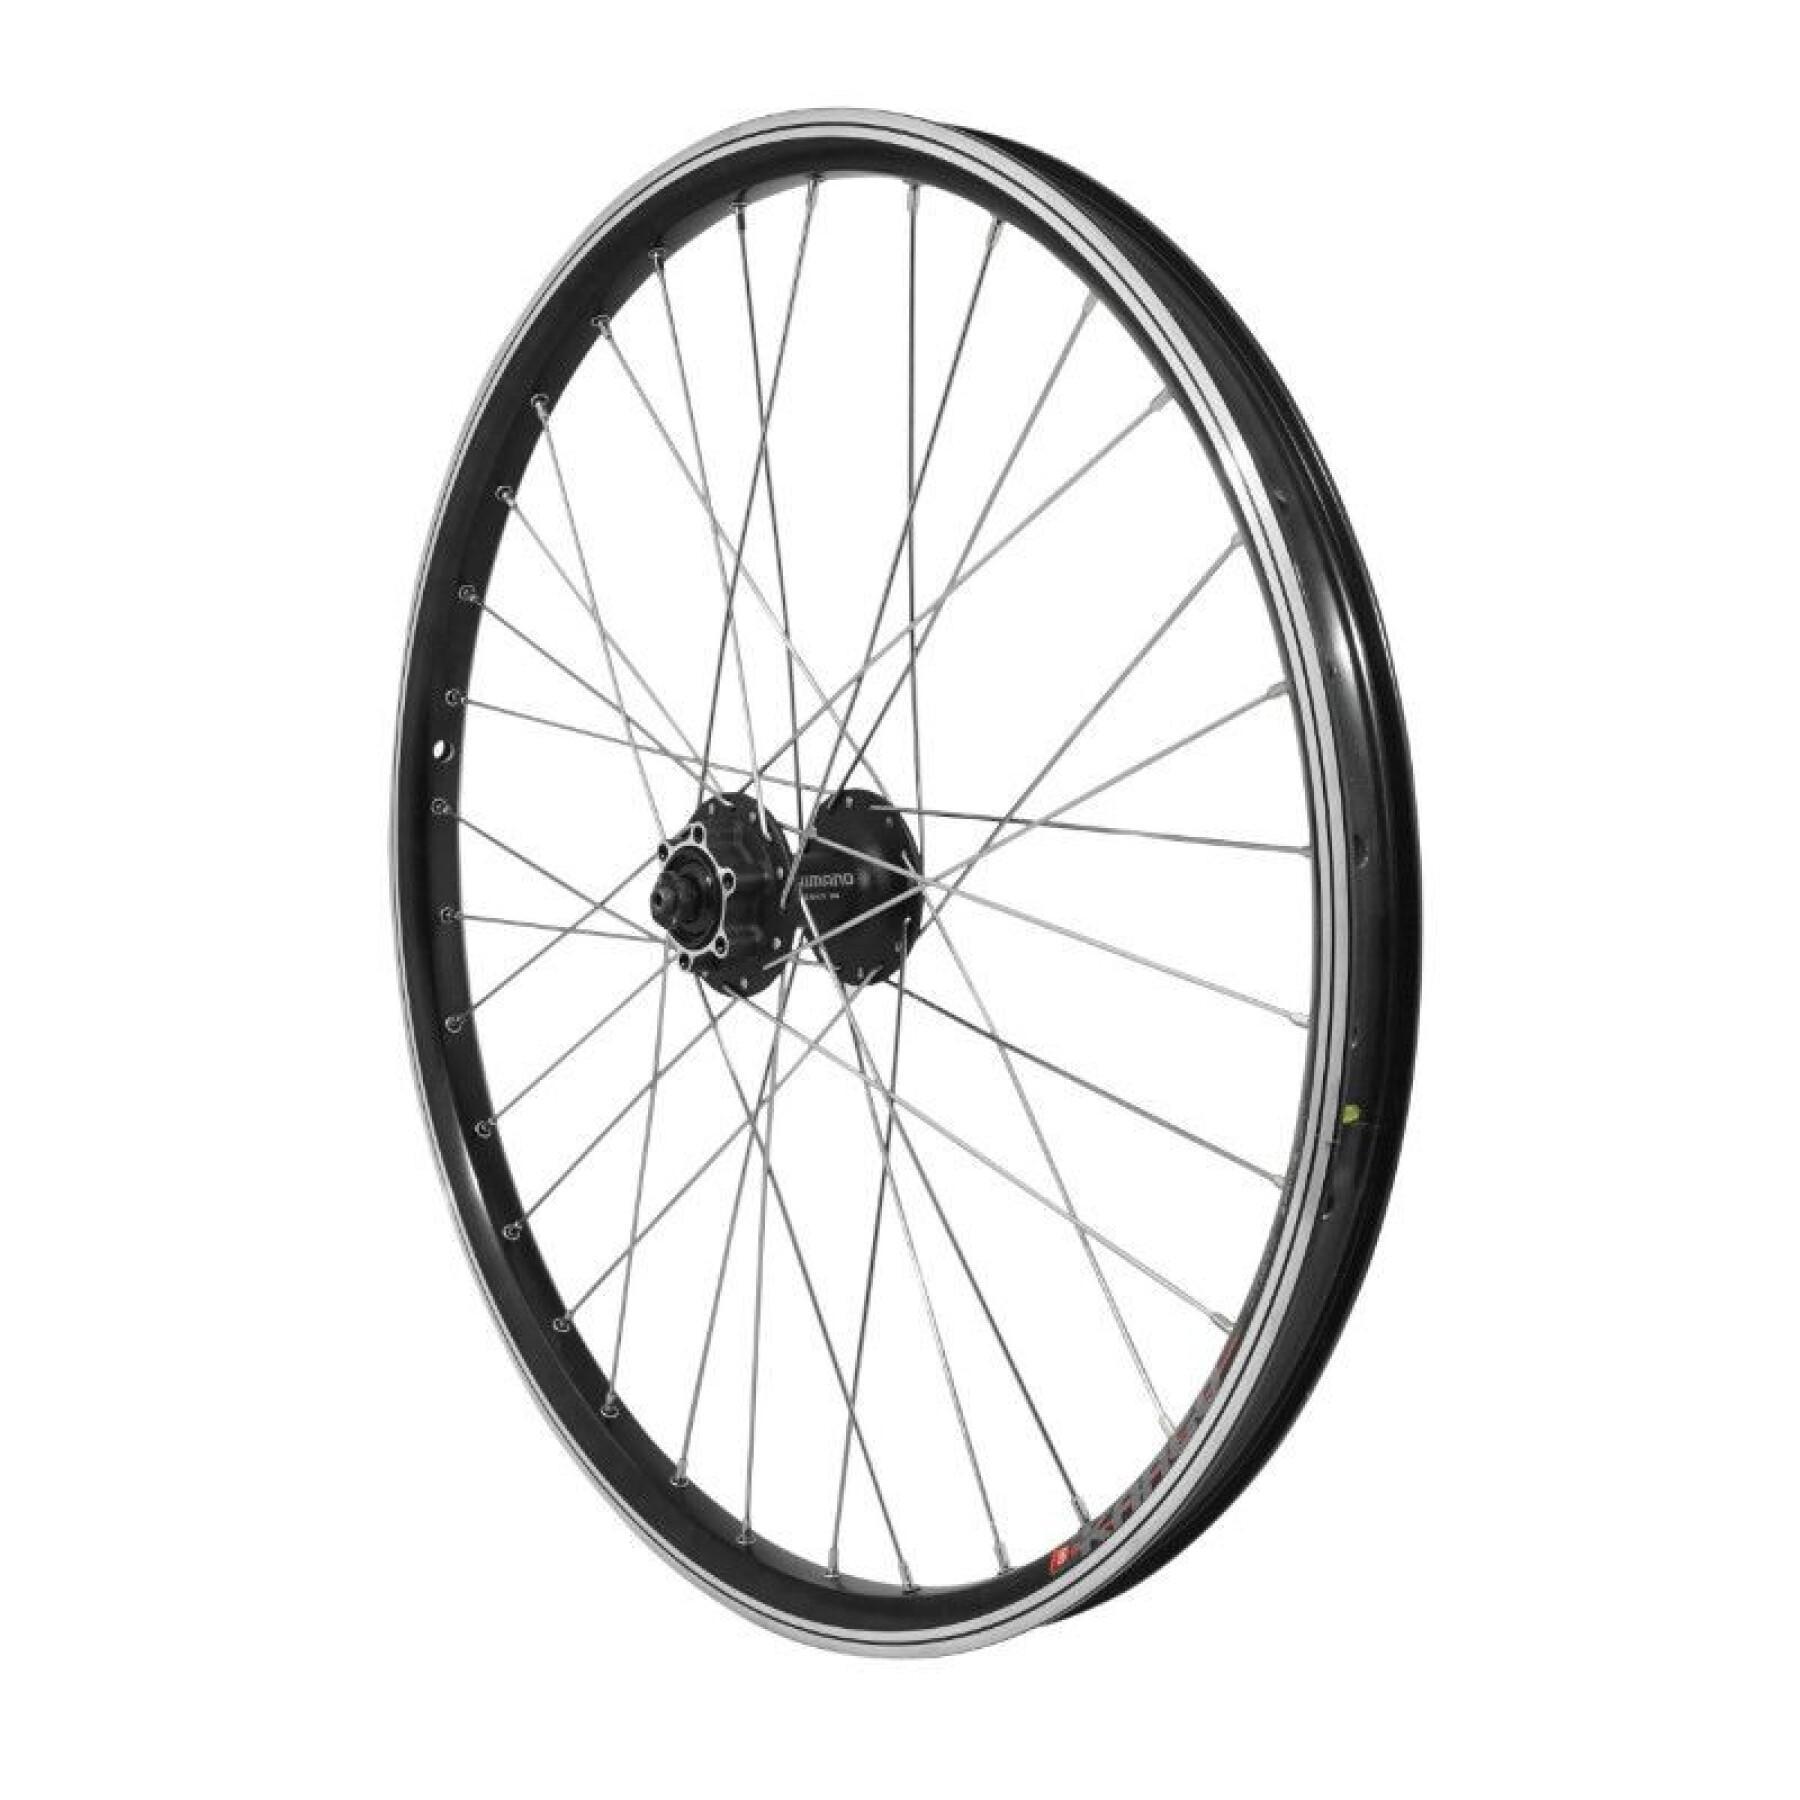 Bicycle wheel disc front aluminum double wall hub shimano disc 6 hole locking (reinforced) stainless steel spoke Velox Kargo - Vae - E-Bike M475